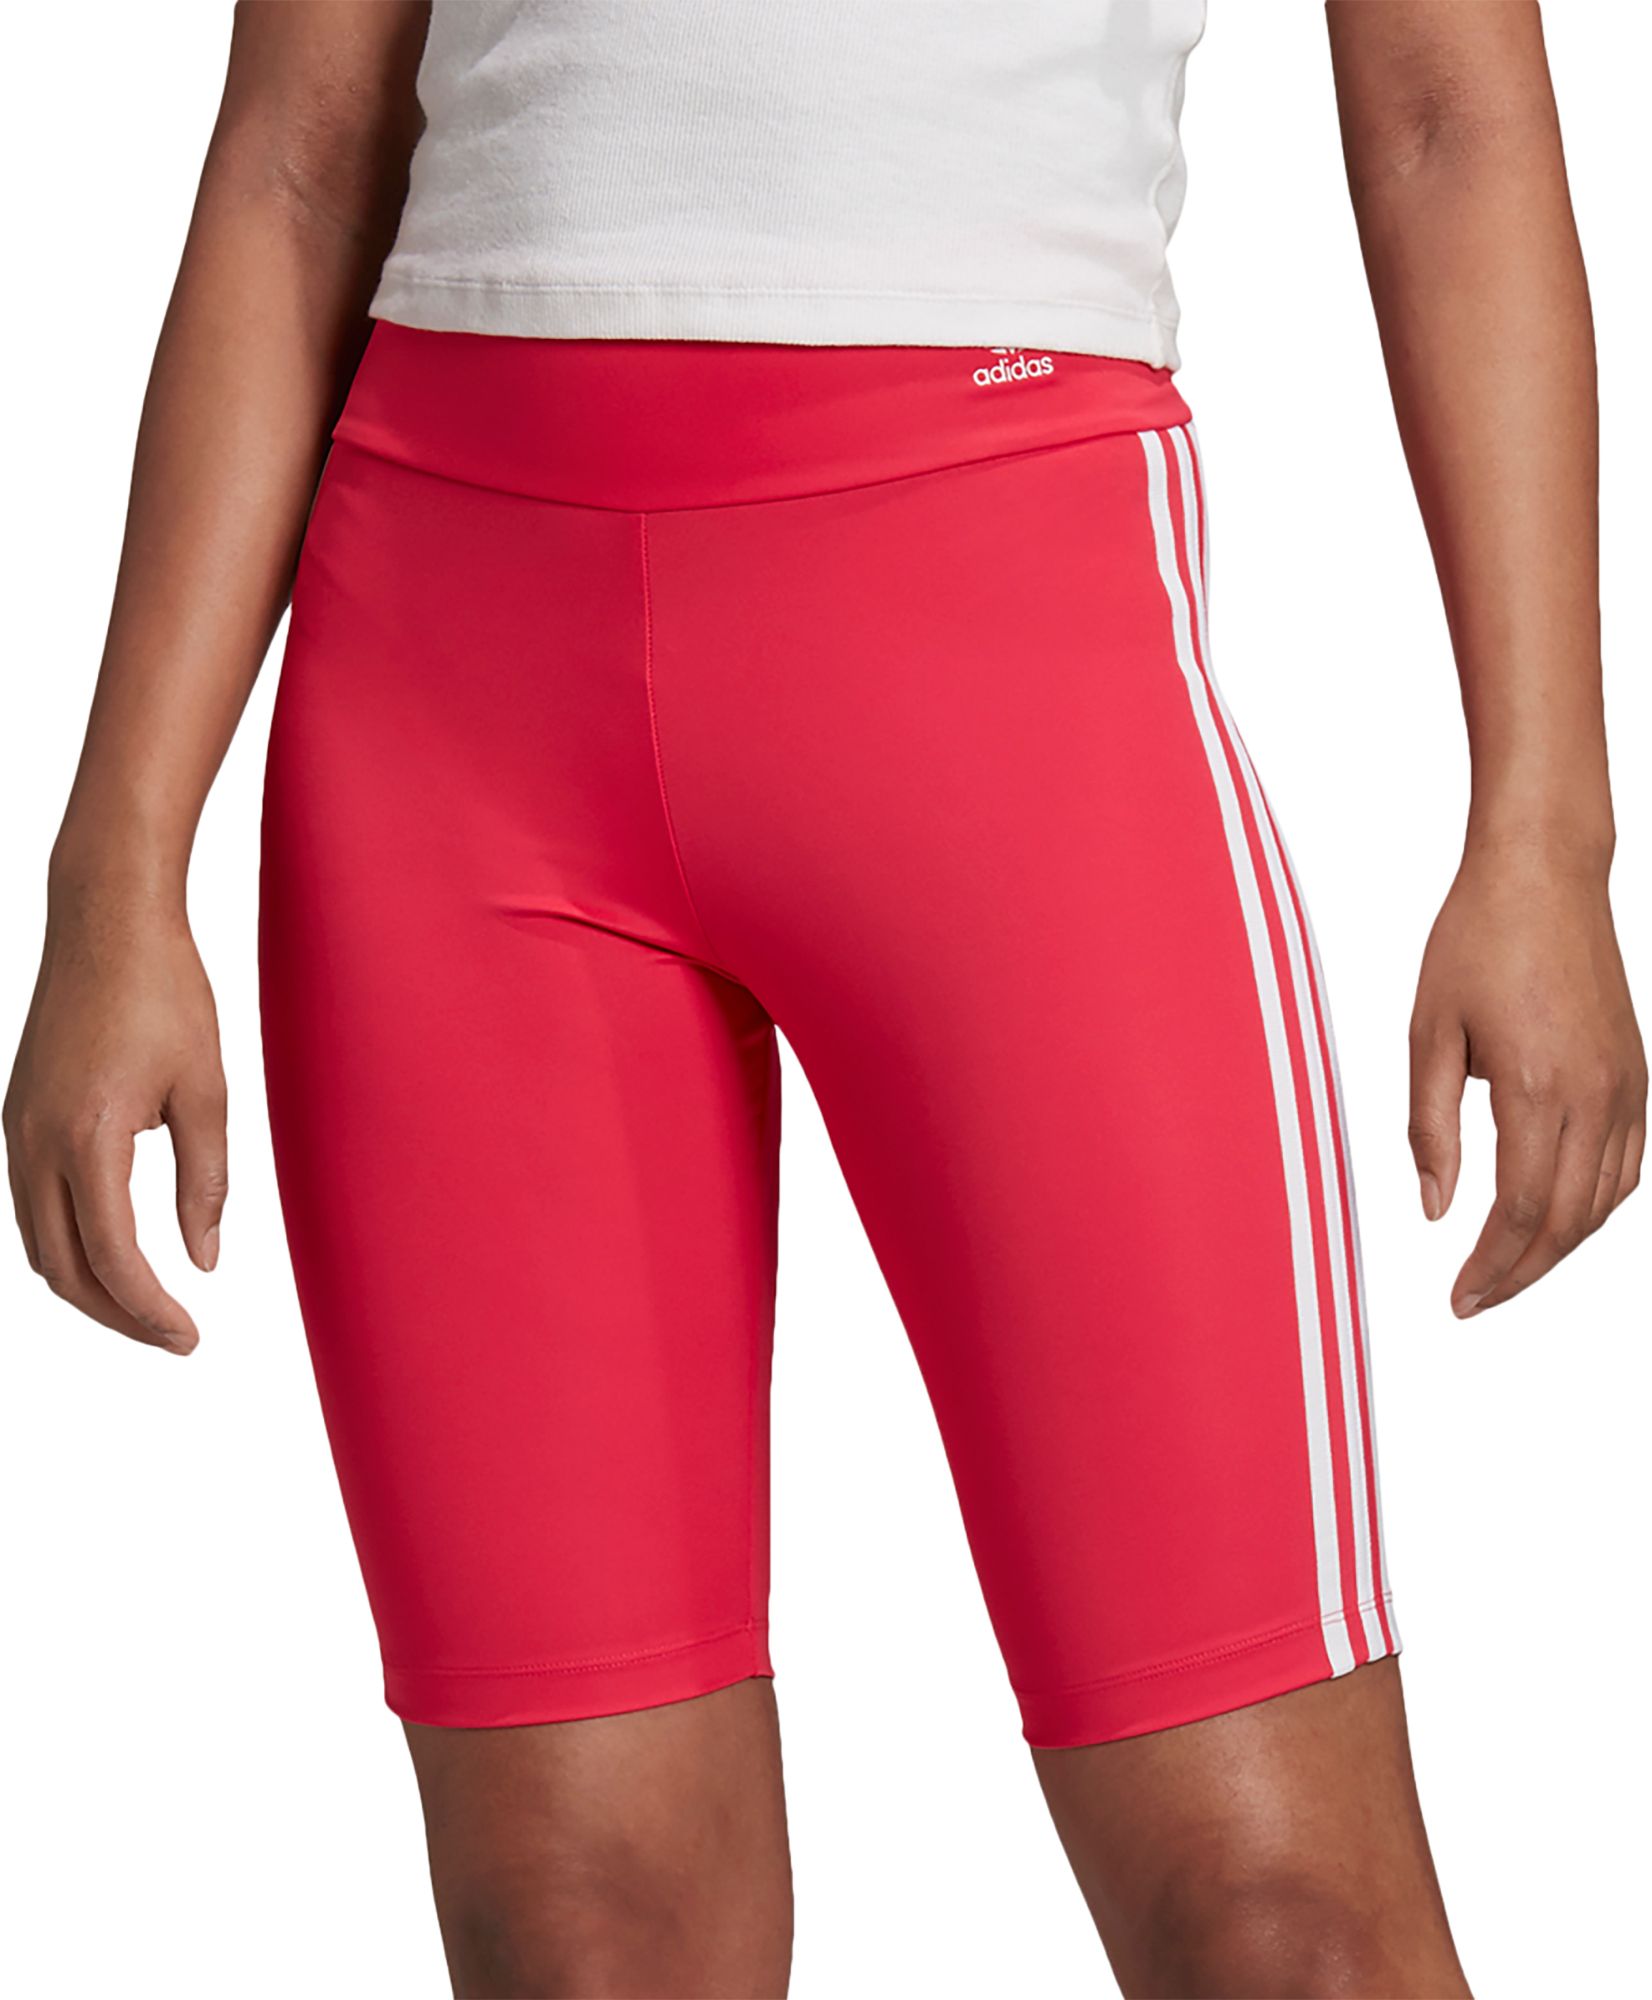 red bike shorts women's